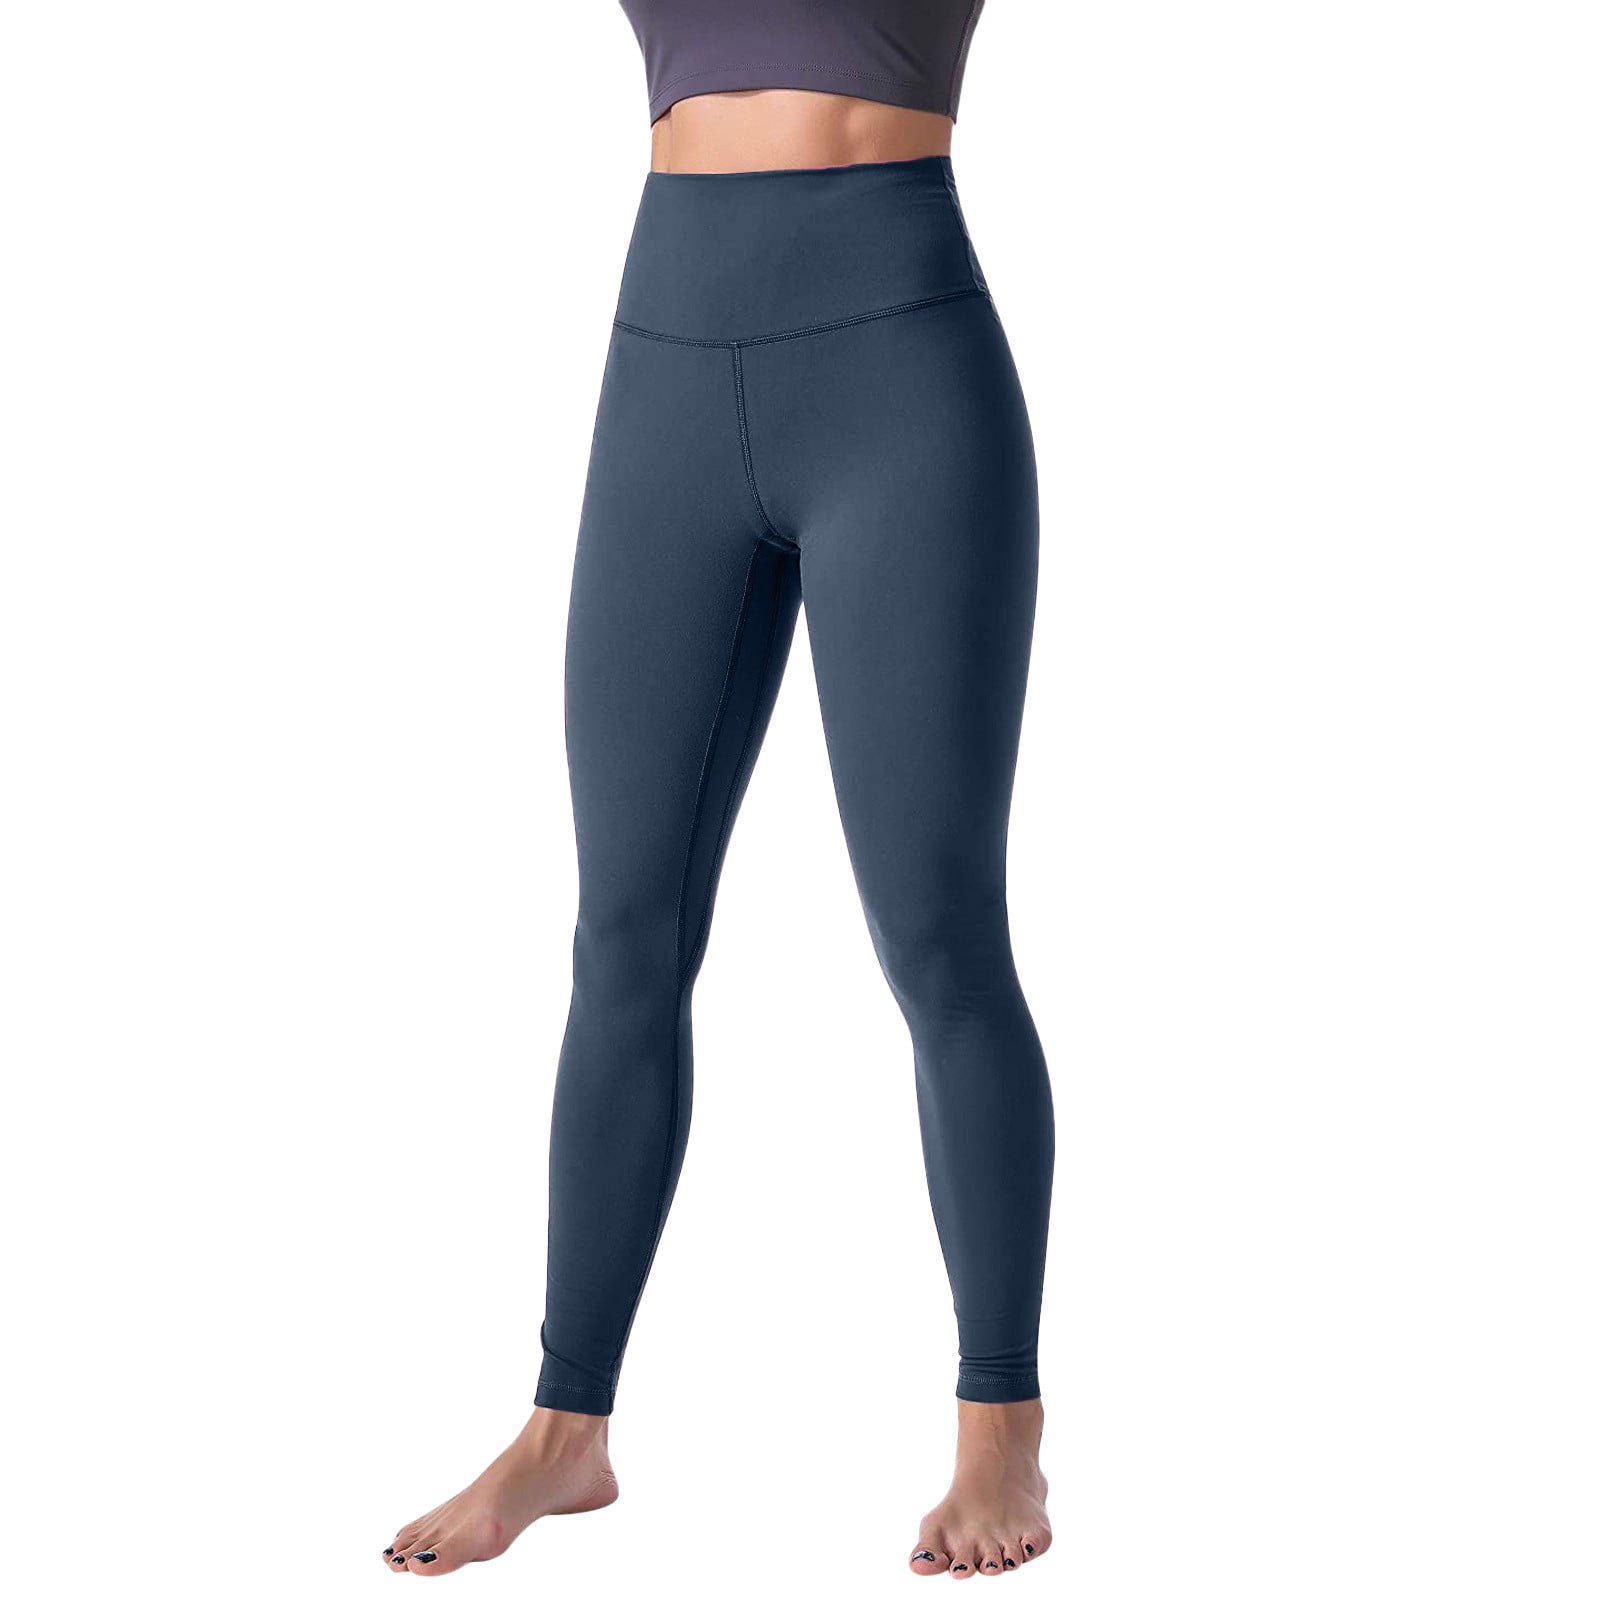 Cathalem Cute Yoga Pants for Girls 10-12 Fitness Leggings Print Yoga Sports Workout  Women's Pants Running Yoga Pants Loose Harem Pants Navy XX-Large 